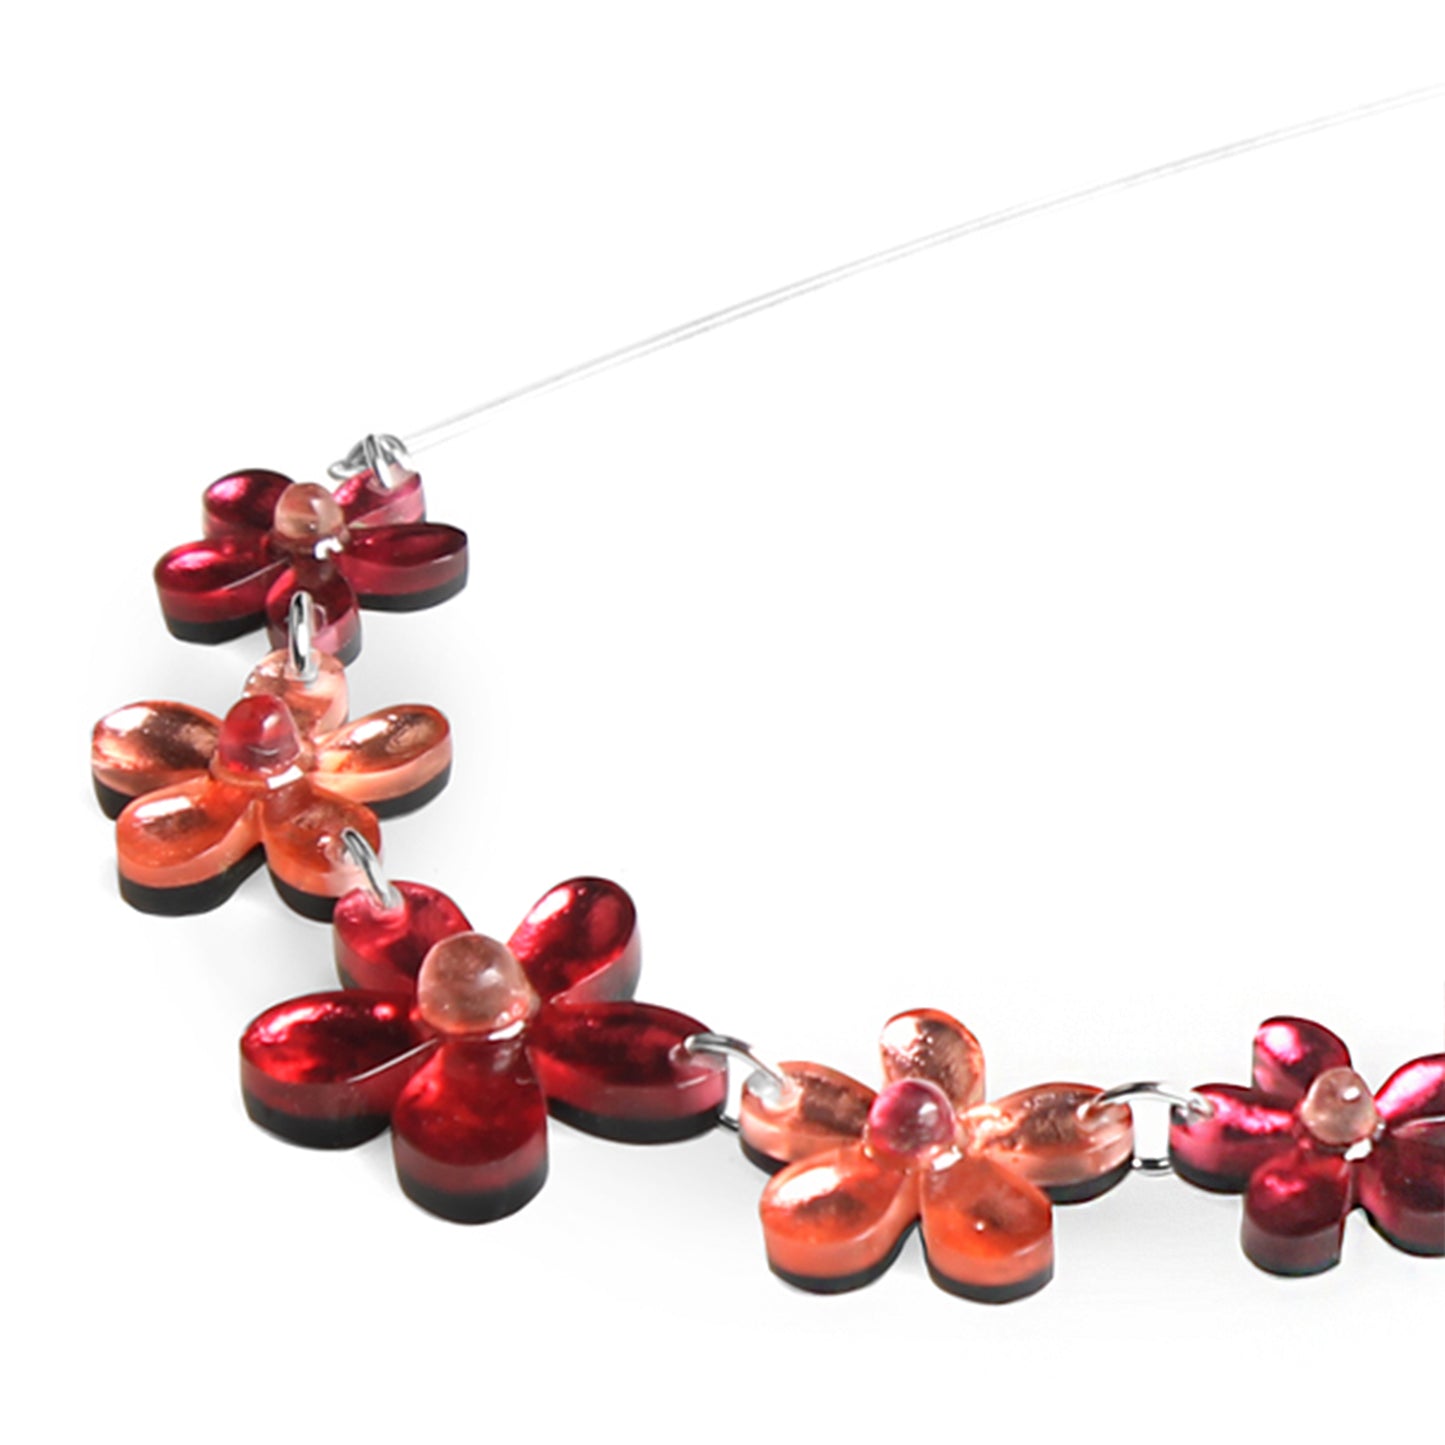 Raspberry Flower Necklace